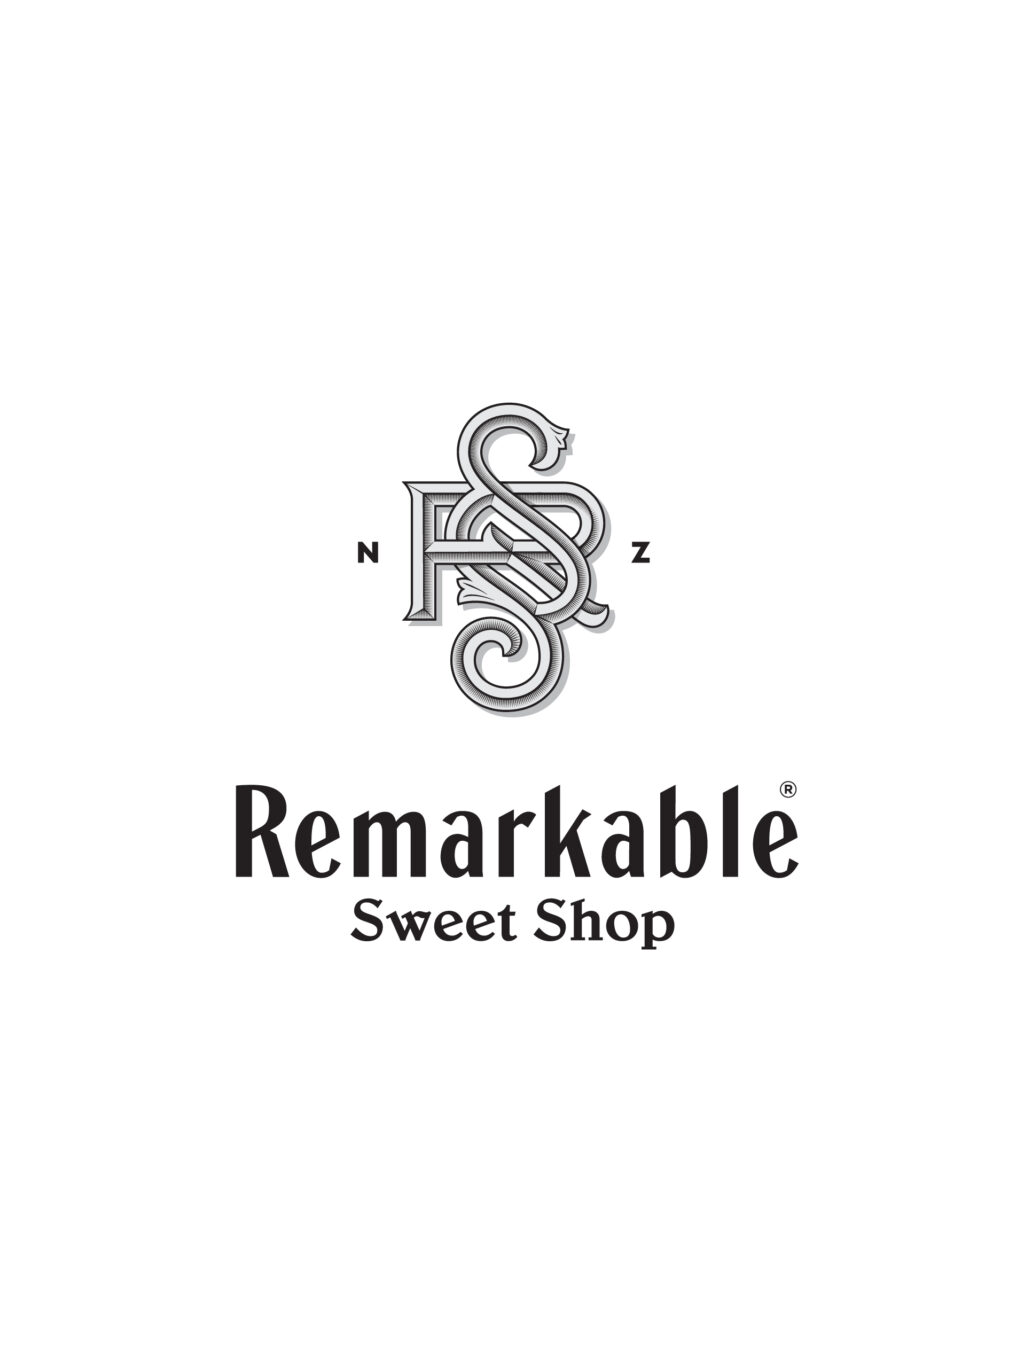 Remarkable Sweet Shop – 2017